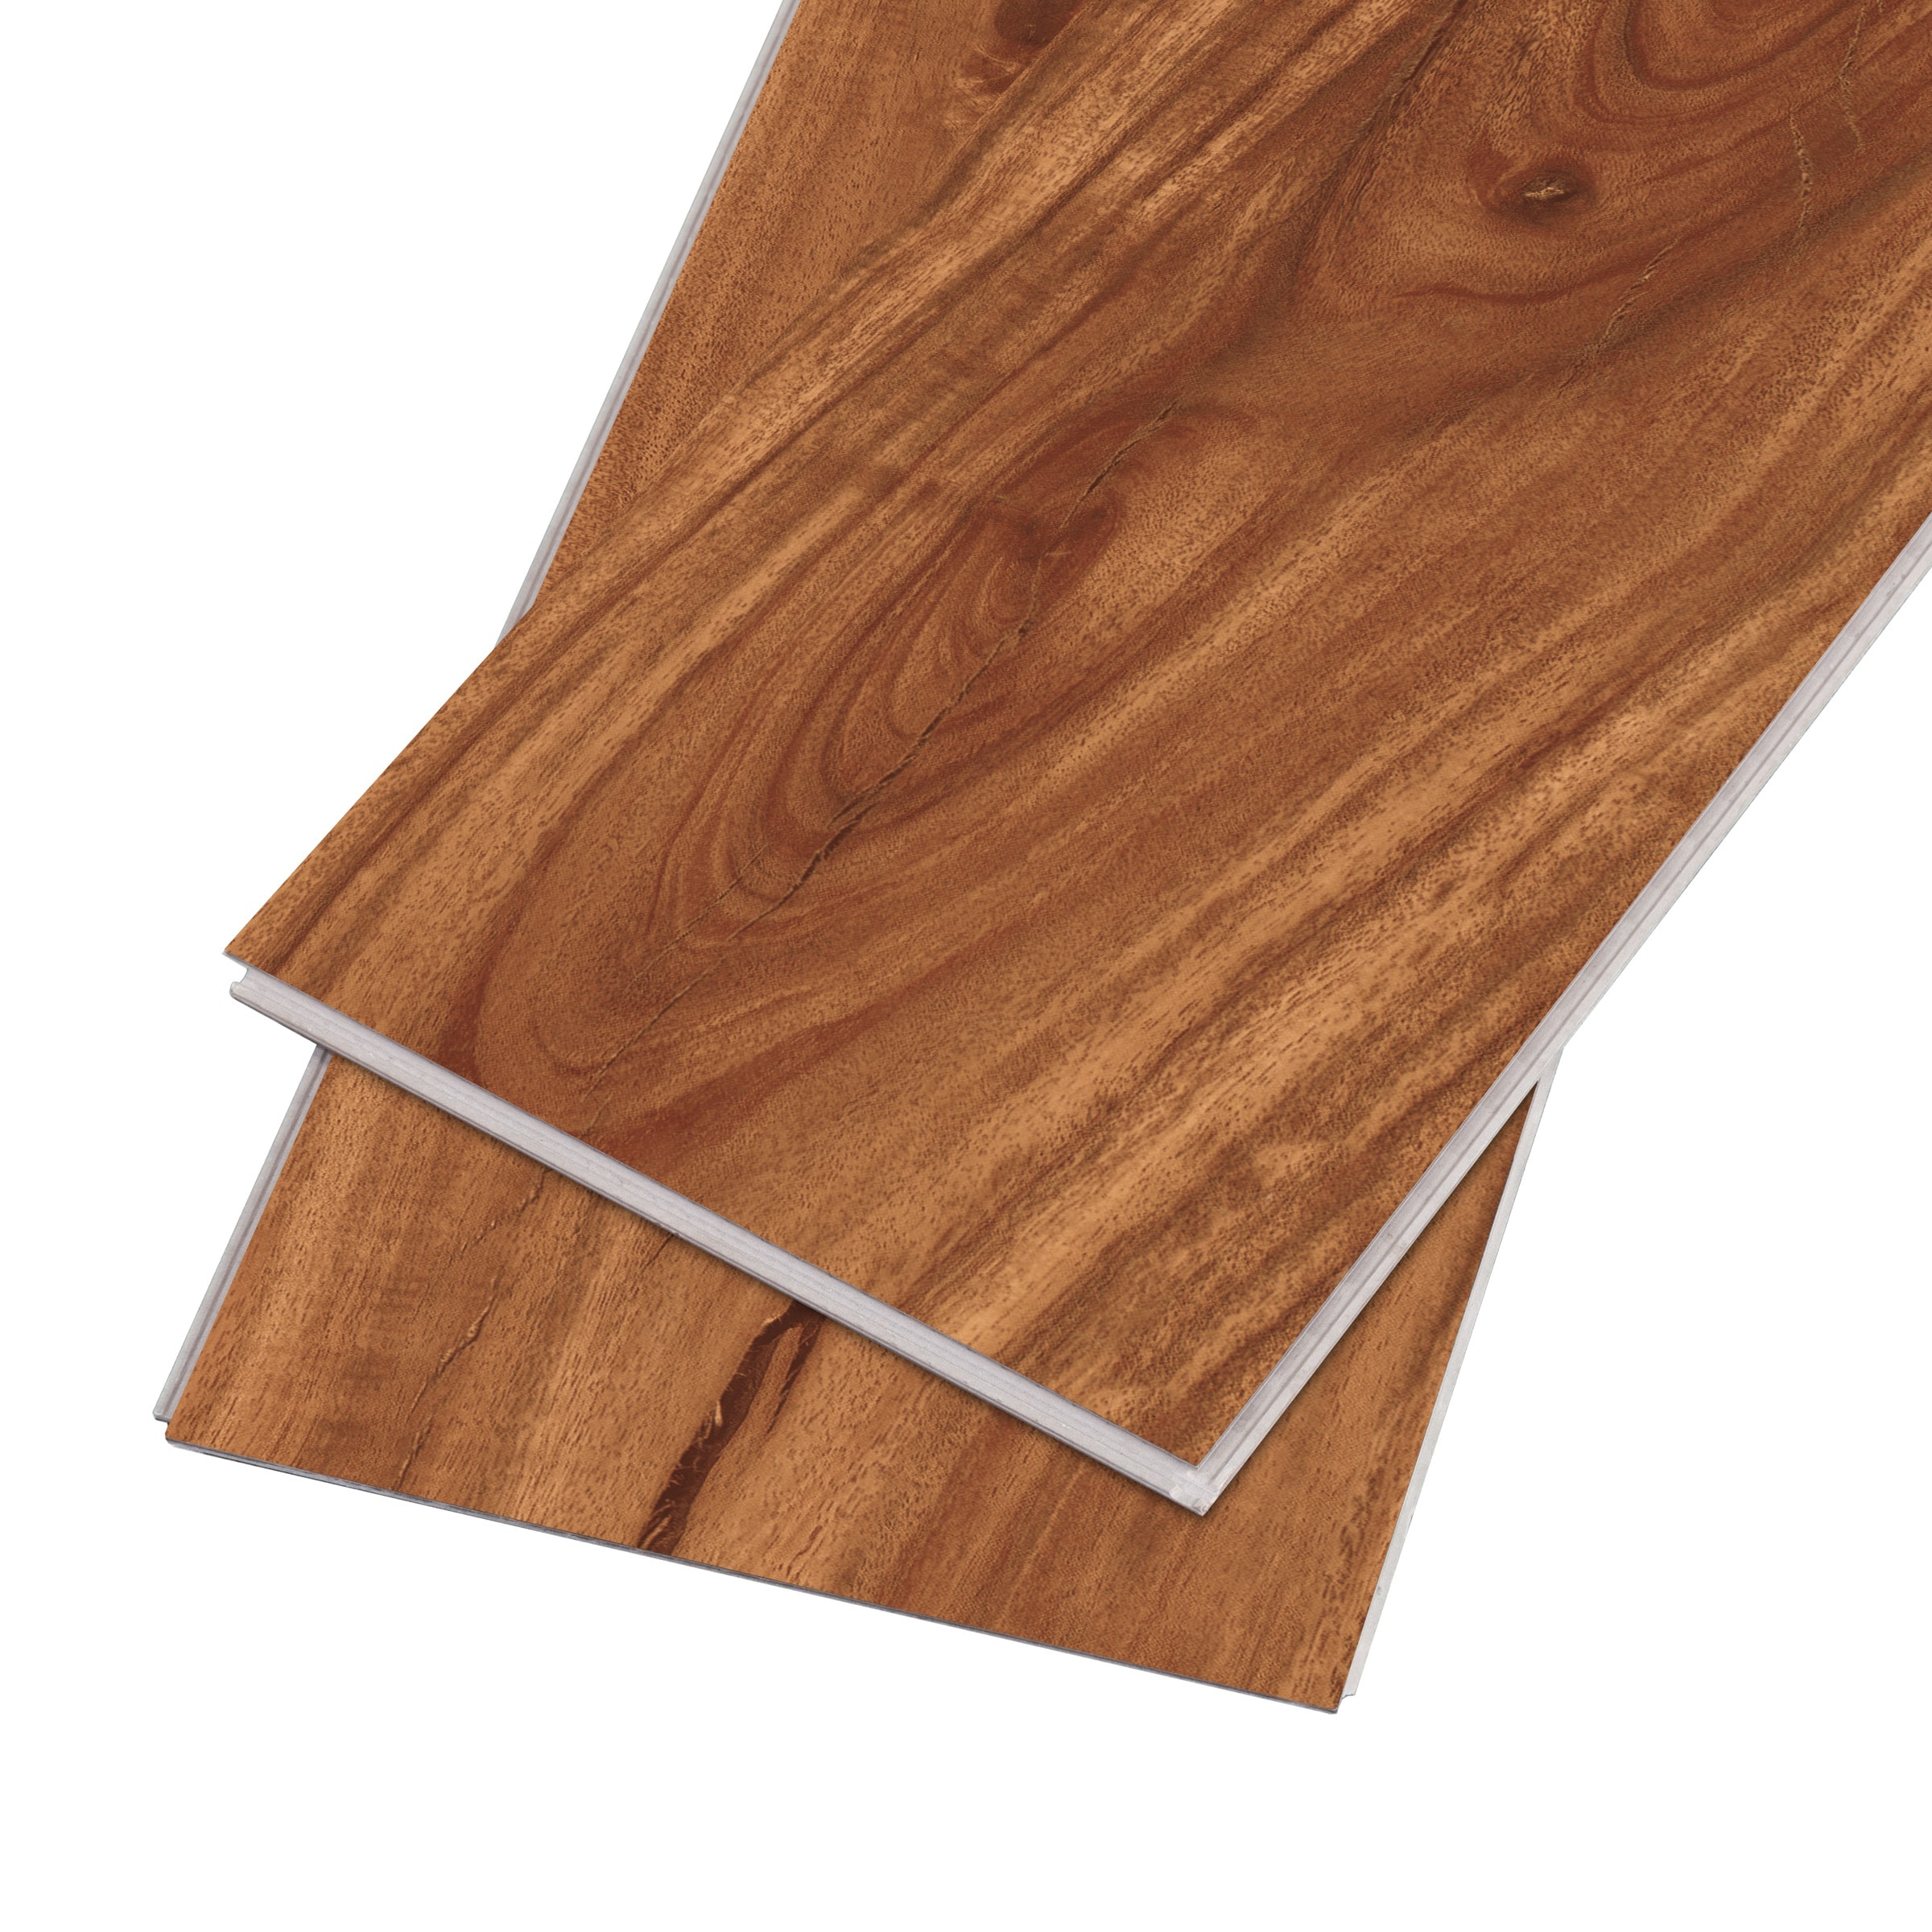 Ambient - Rigid Core Luxury Vinyl Plank, Waterproof LVP Flooring Sample,  Color: Wilde Acacia : : Home Improvement